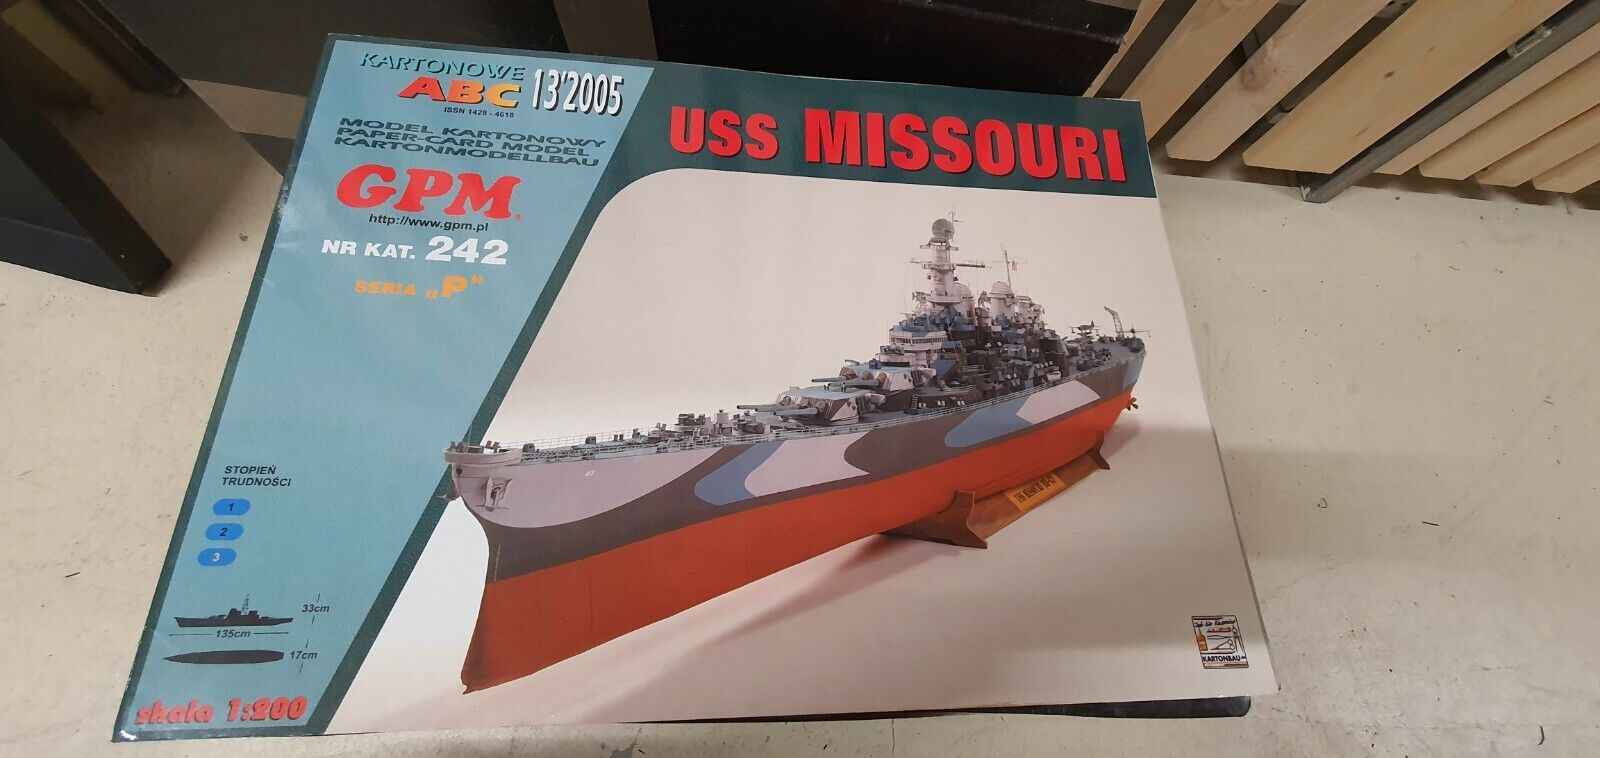 GPM 242  USS MISSOURI 1:200 Kartonmodellbau